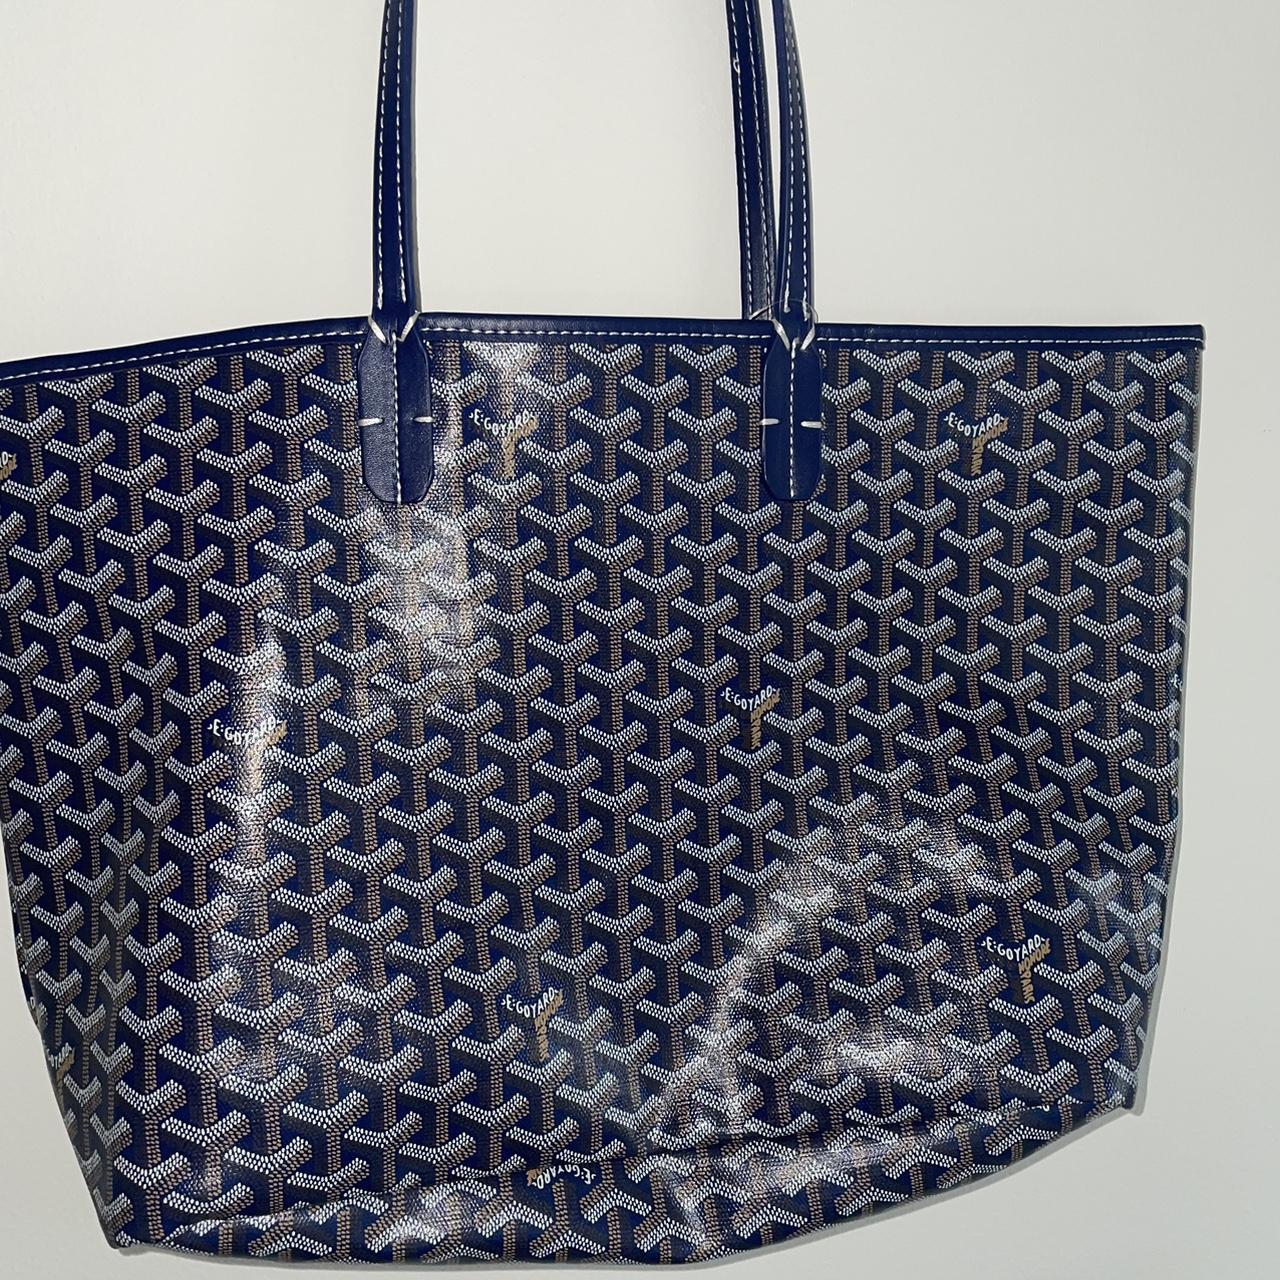 Goyard Women's Bag